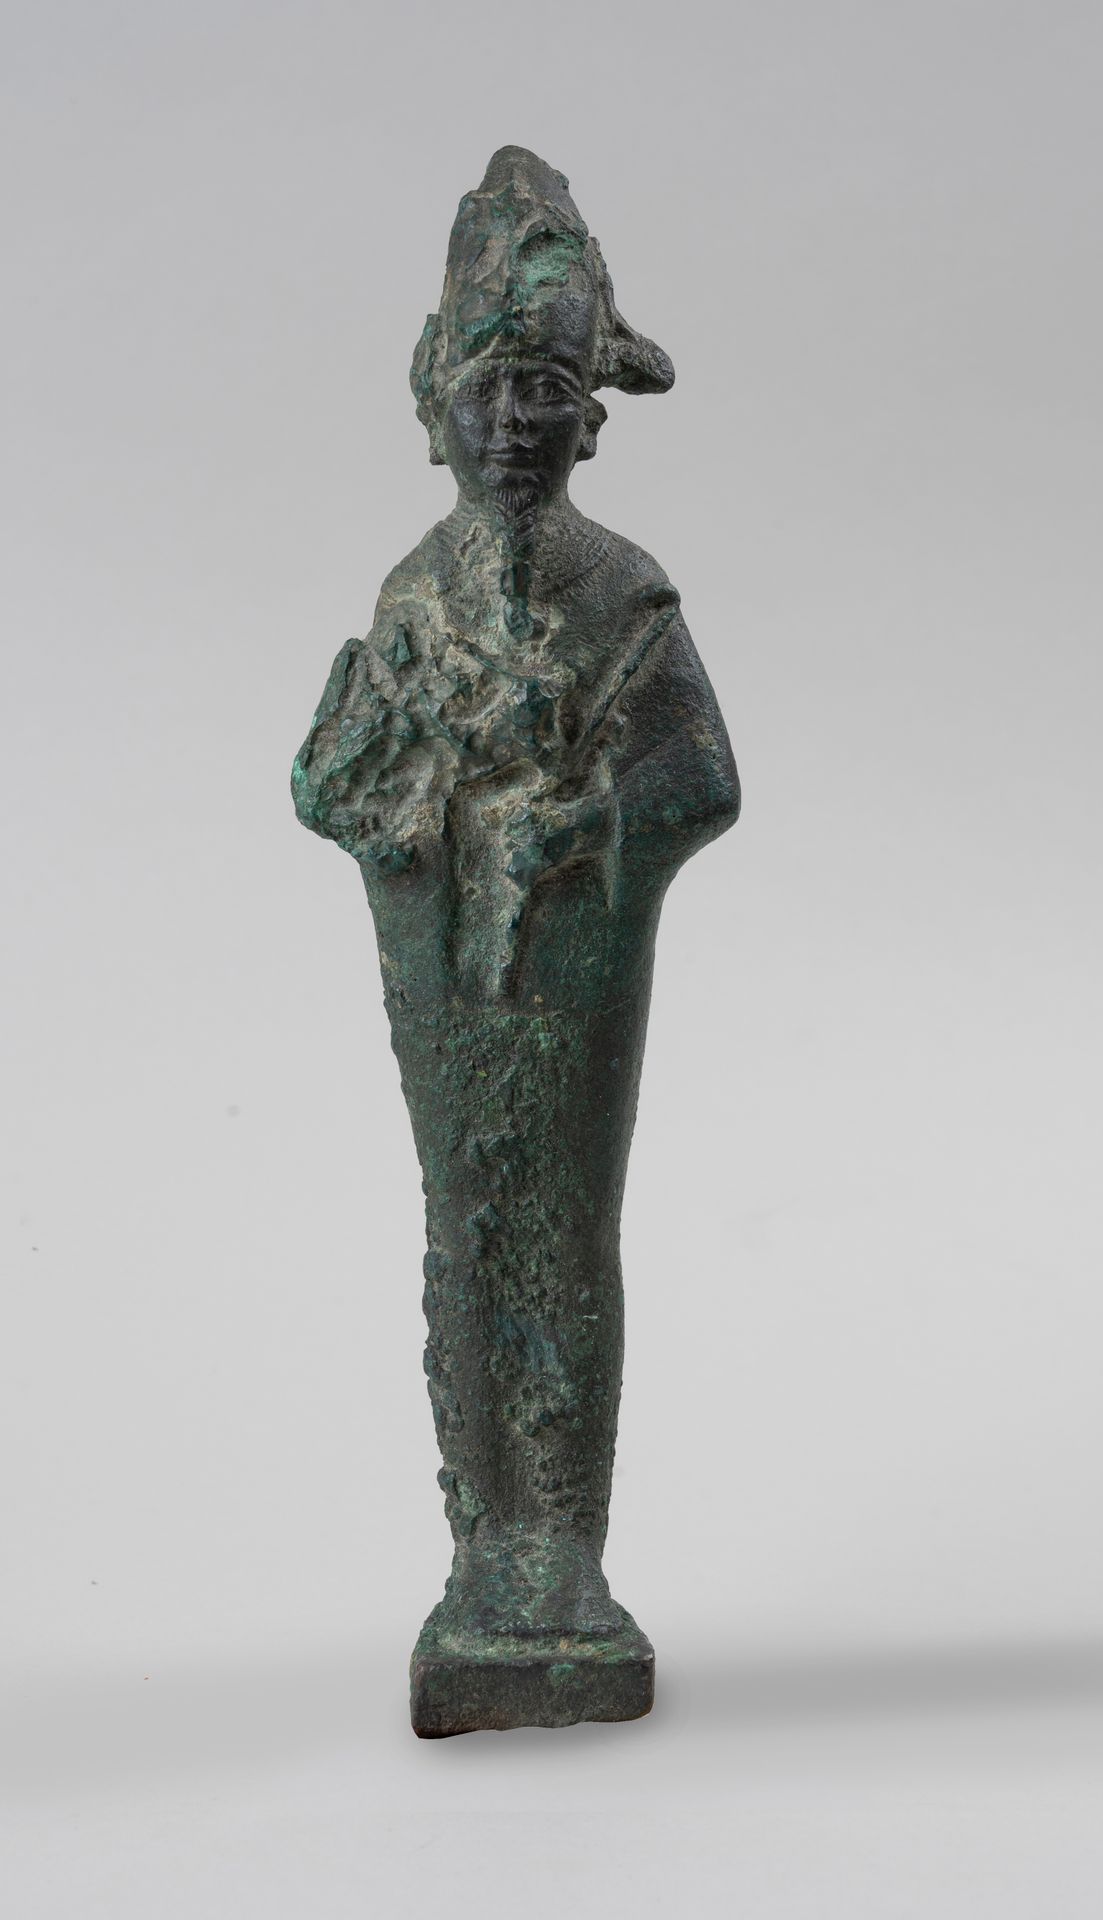 Null 奥西里斯的绿色铜质雕像。

早期埃及

H.25厘米。